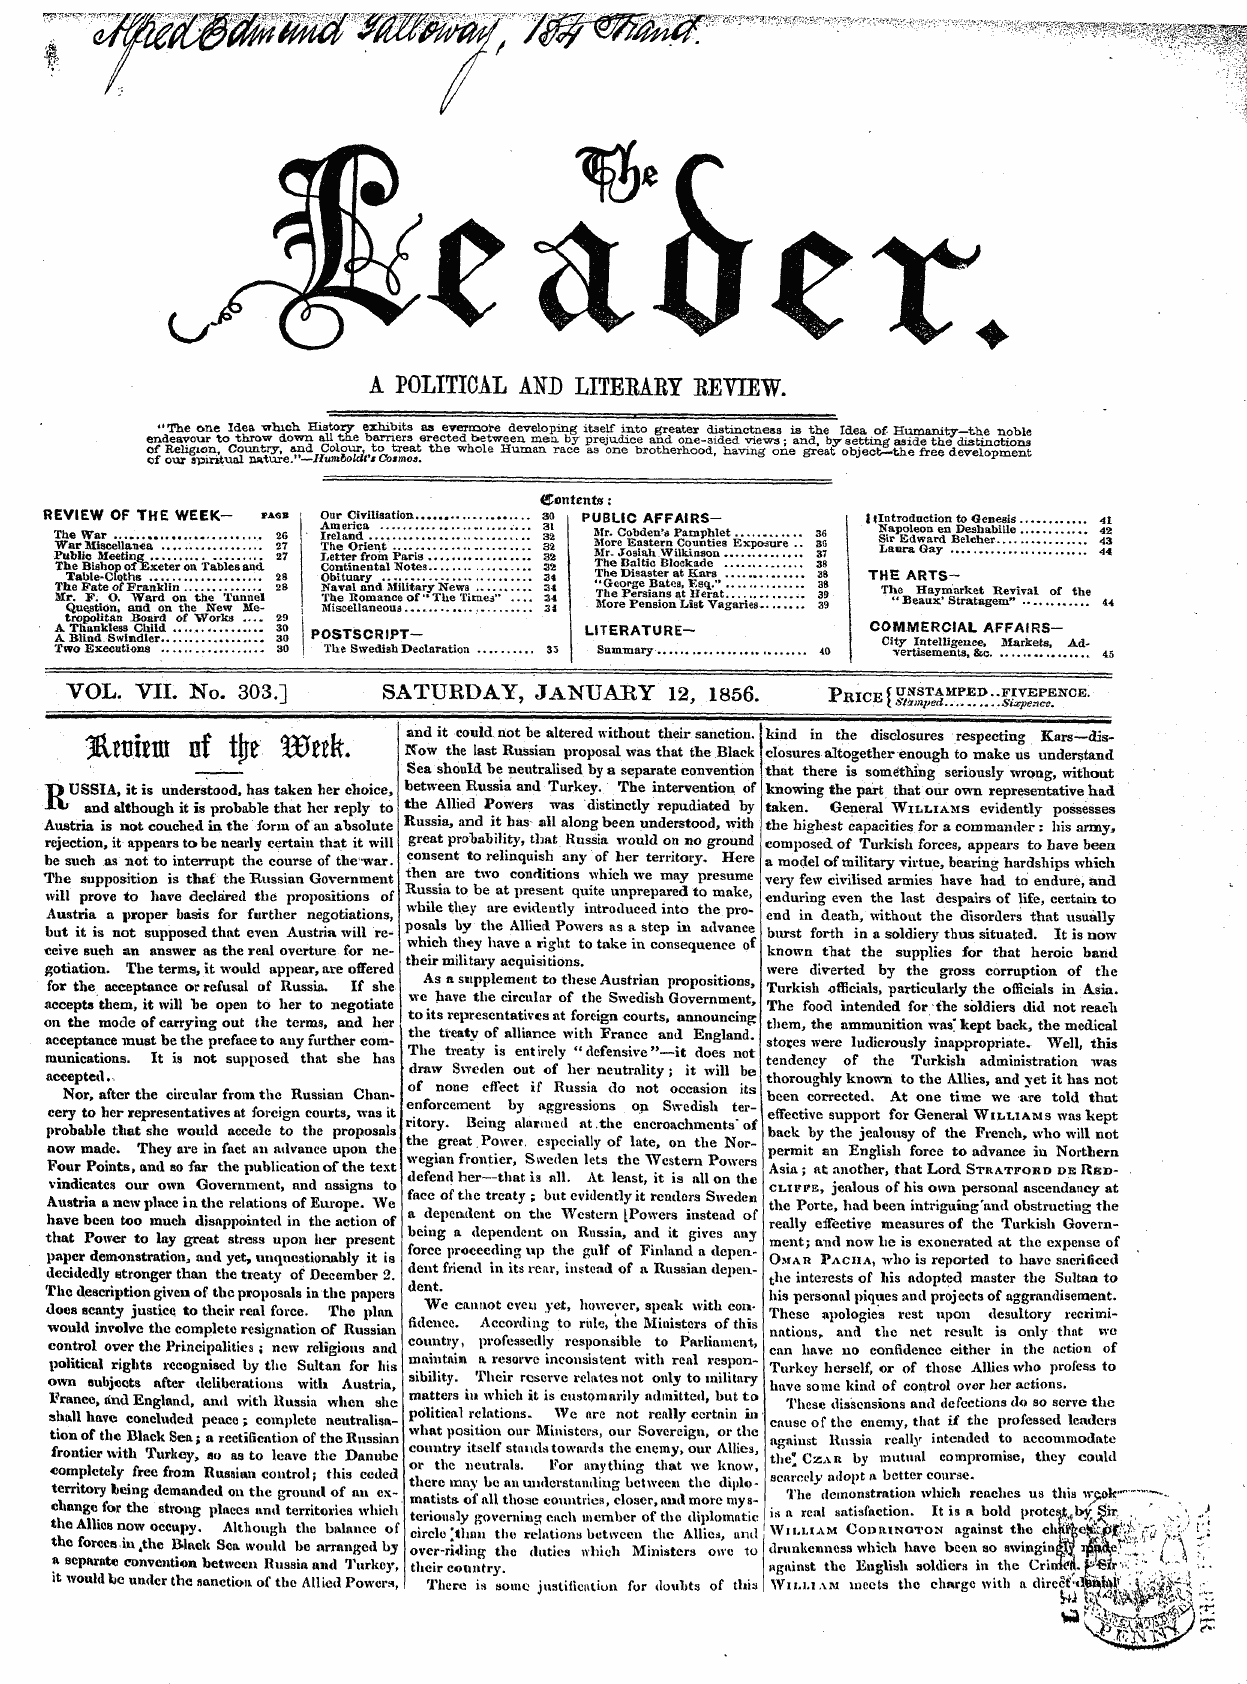 Leader (1850-1860): jS F Y, 2nd edition - ^^ „ ^ A* /Vw I ^ Cvttllbltt Ox Ilf£ 4x^Evlv4 ¦